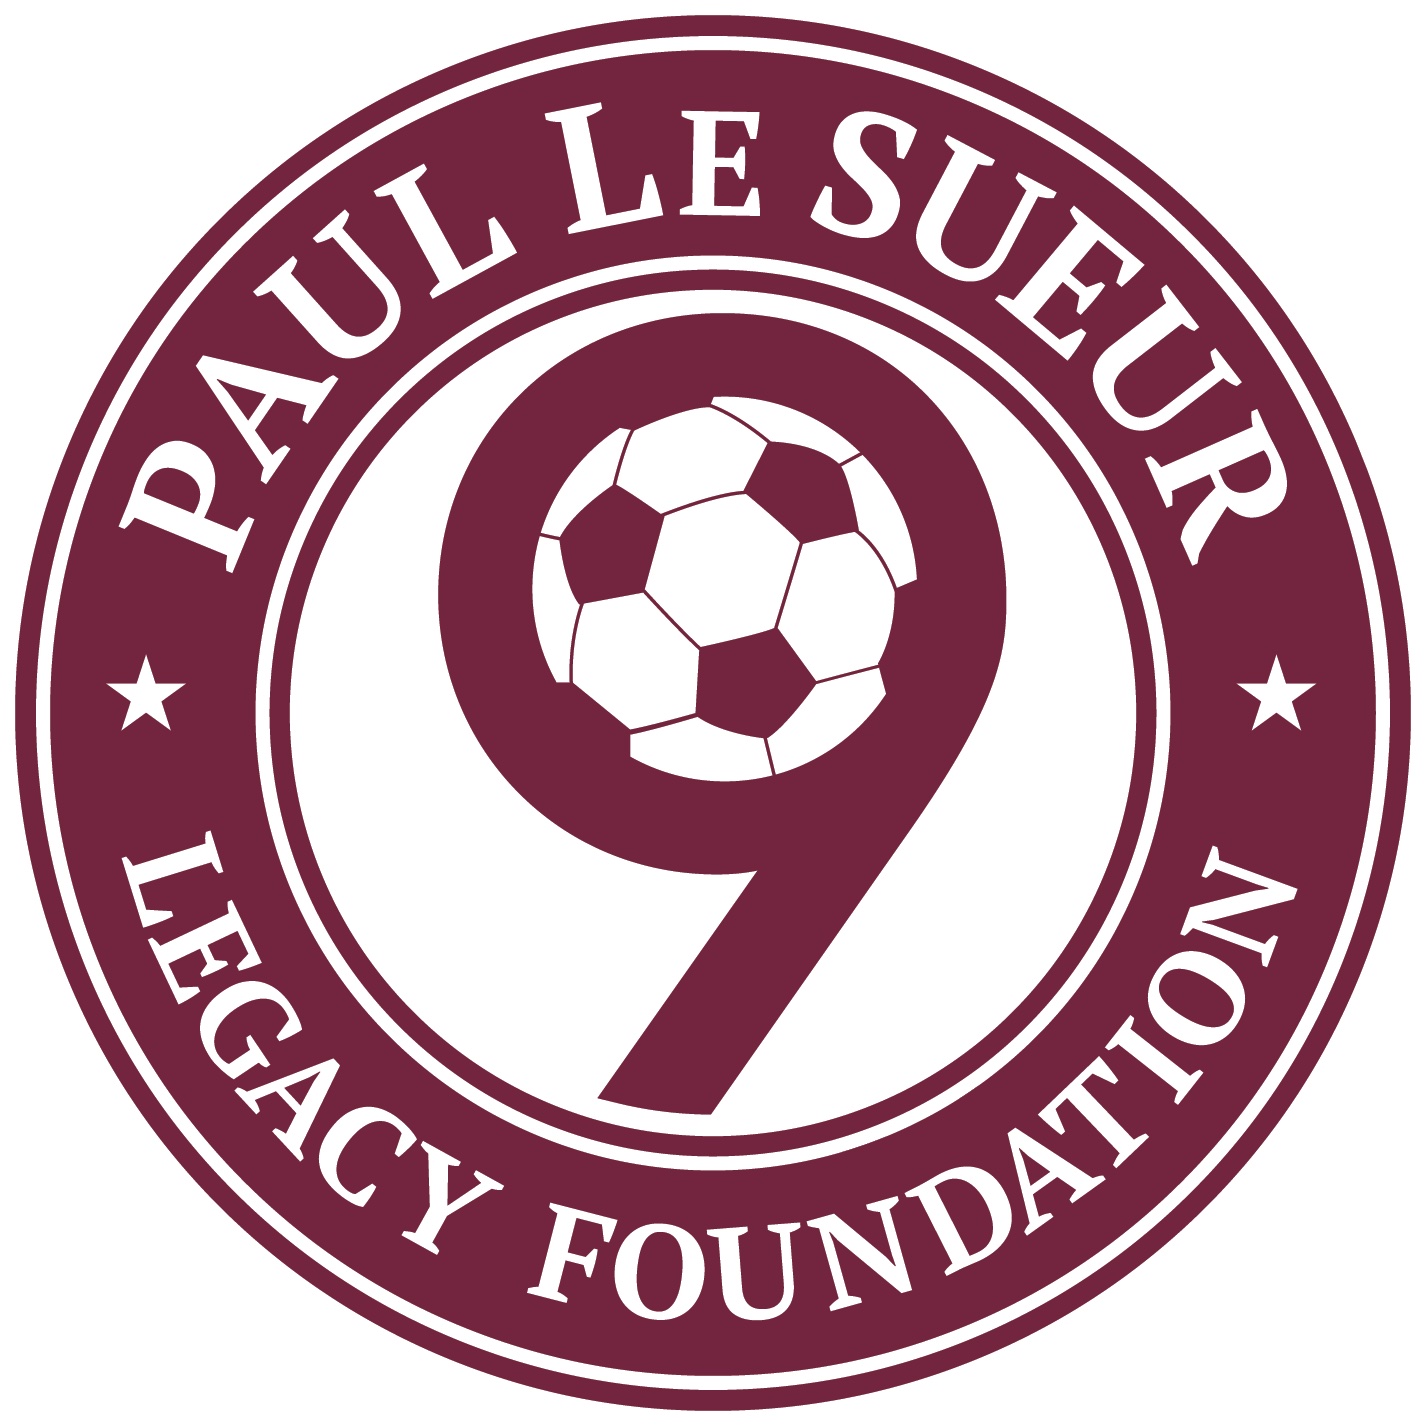 Paul LeSueur Legacy Foundation